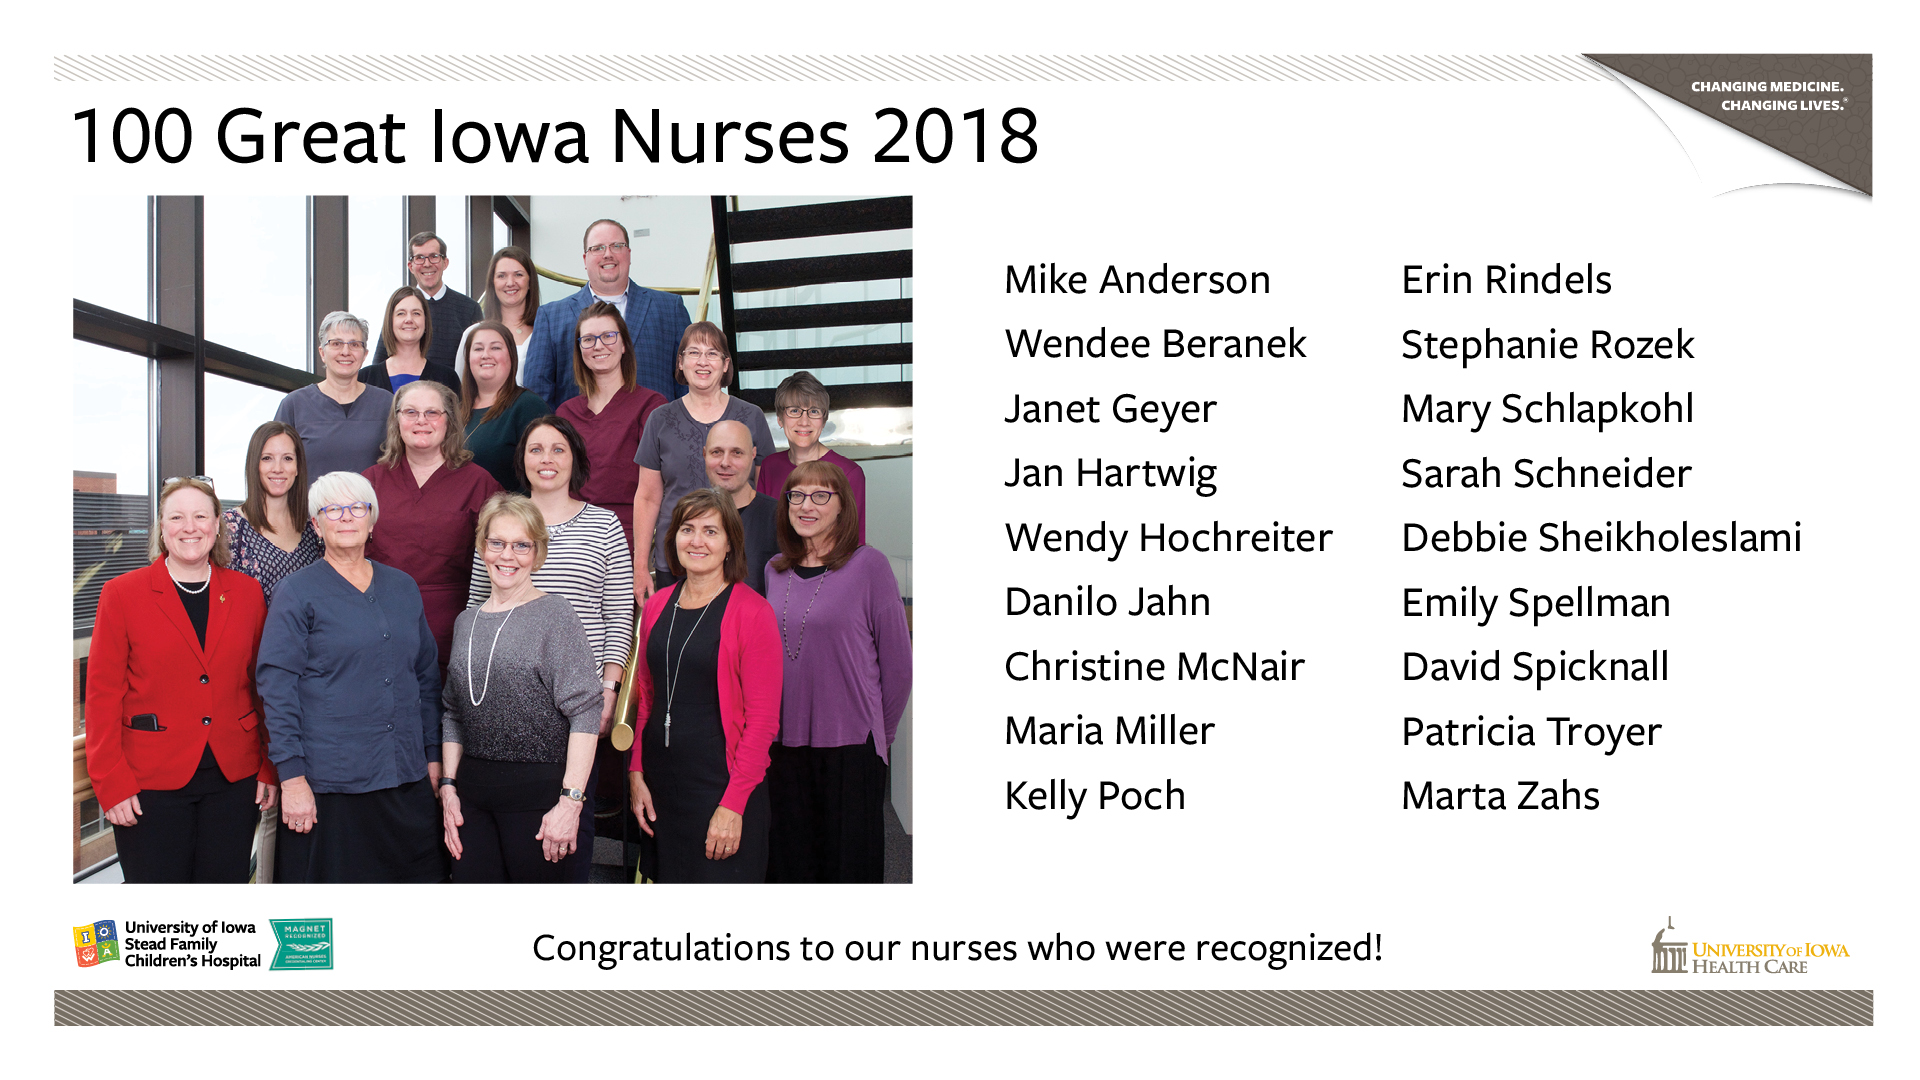 100 Great Iowa Nurses Group 2018